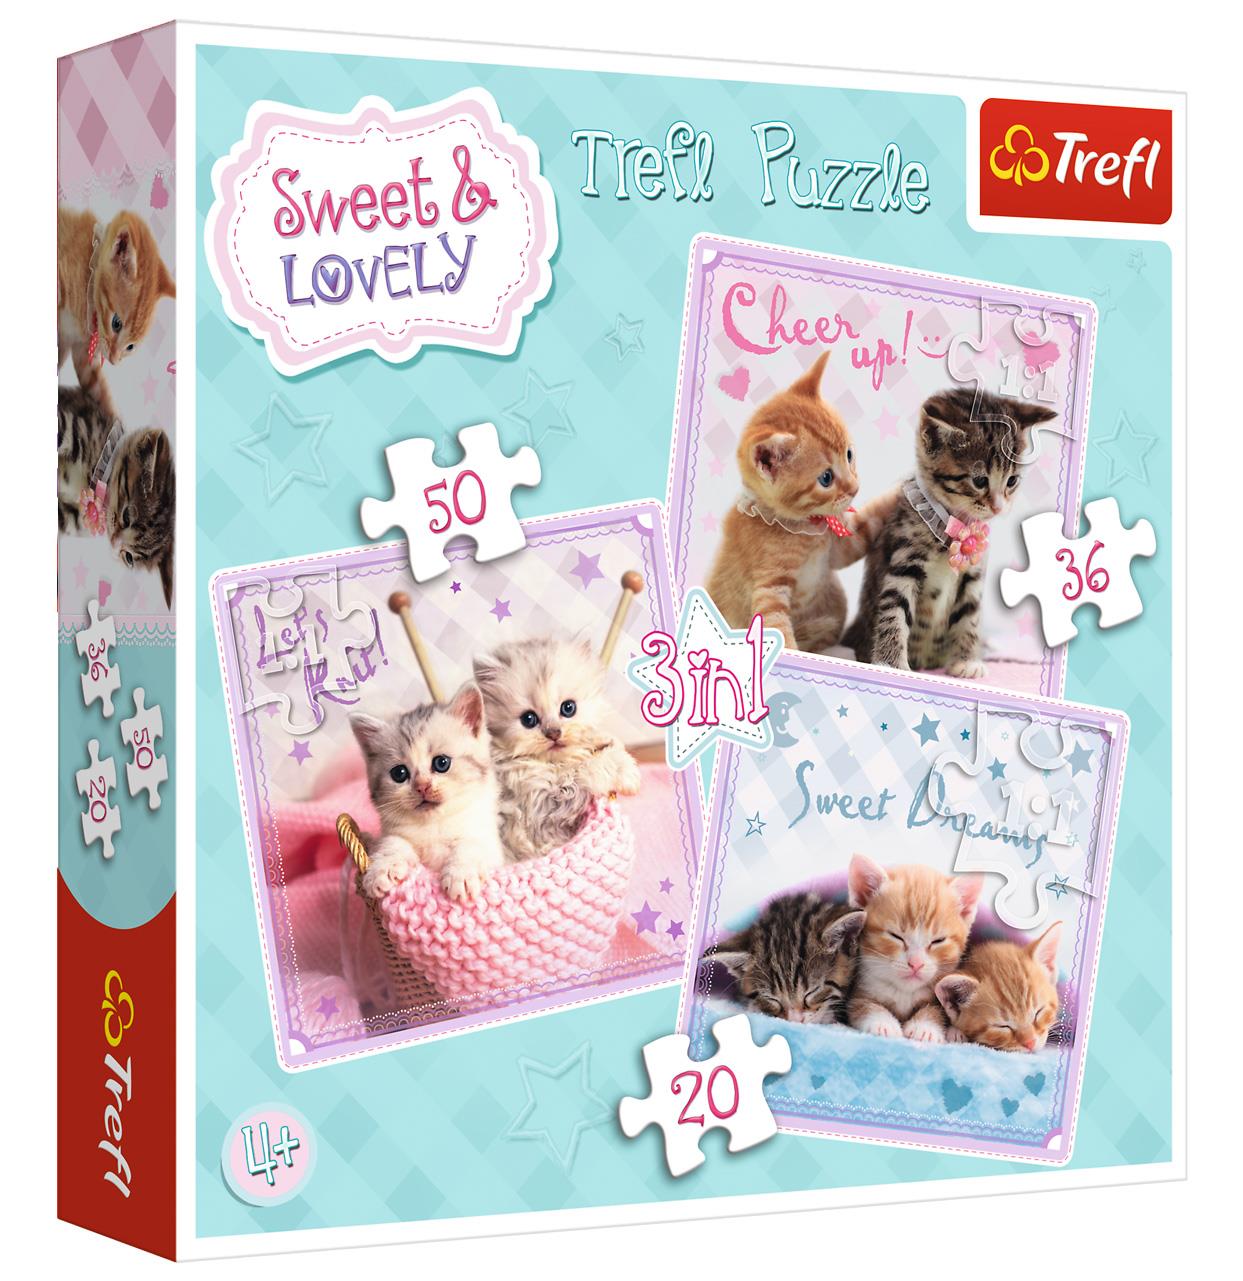 Trefl Çocuk Puzzle 34809 Sweet Kittens 20+36+50 Parça 3 in 1 Puzzle